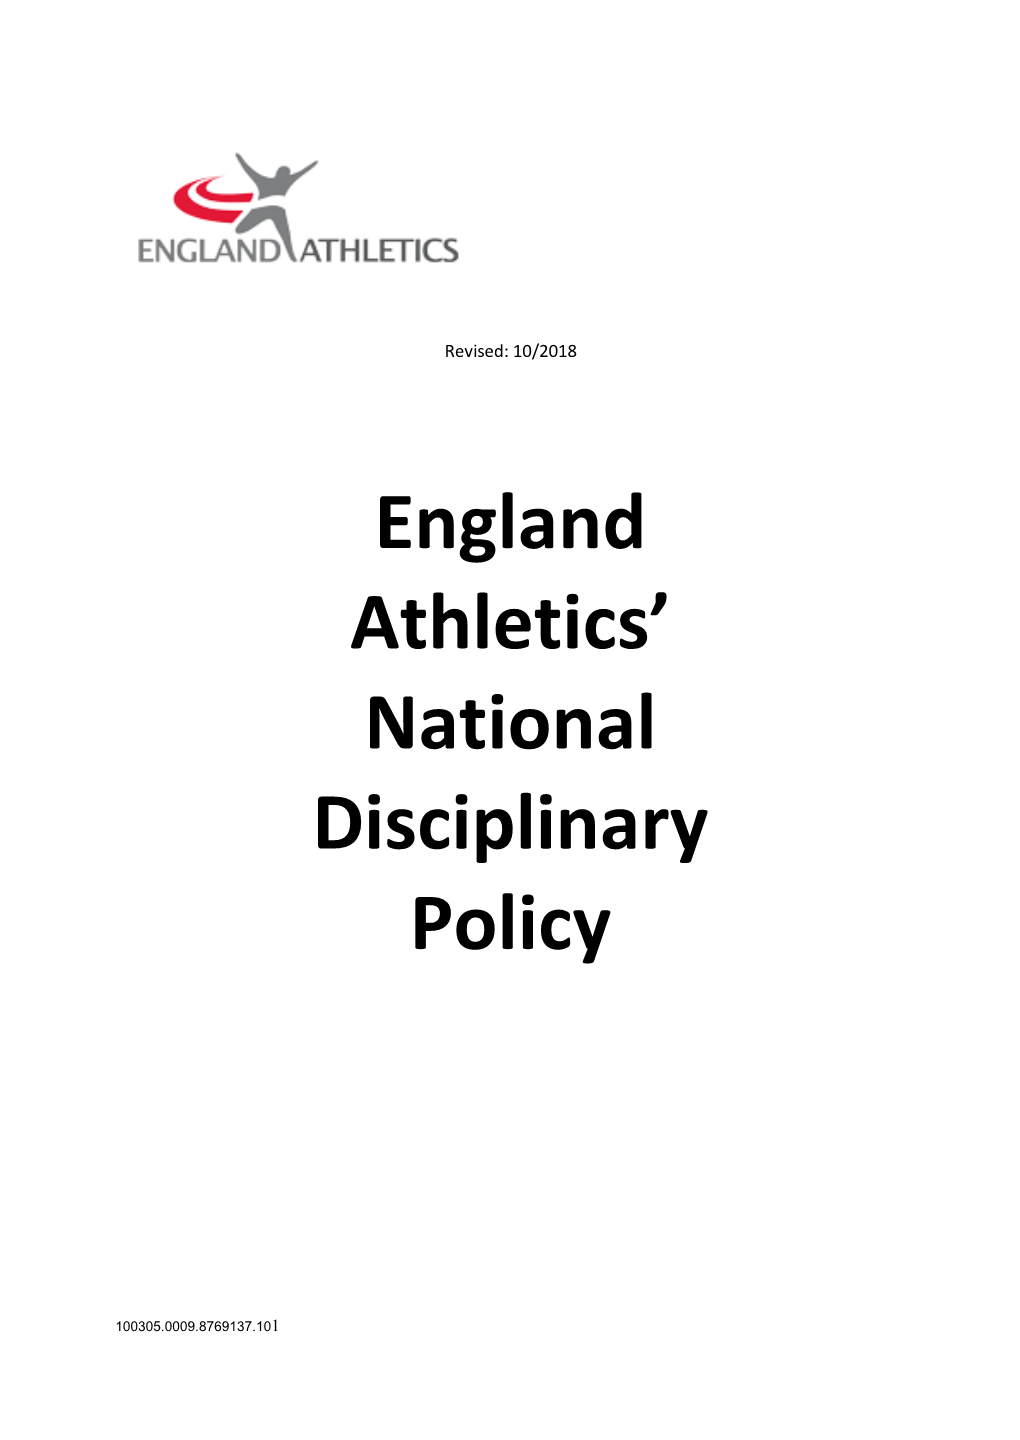 England Athletics' National Disciplinary Policy